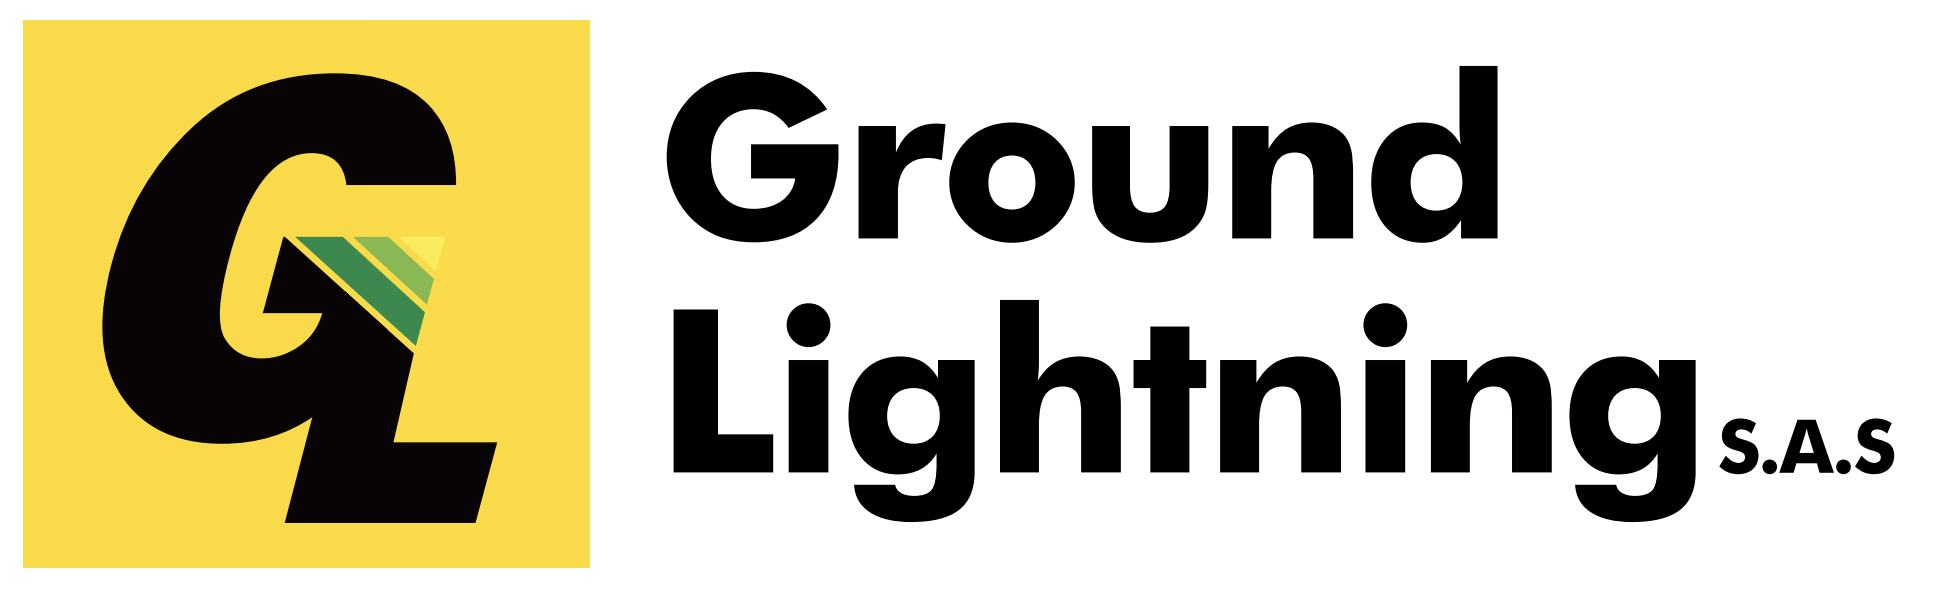 Logo Ground Lightning